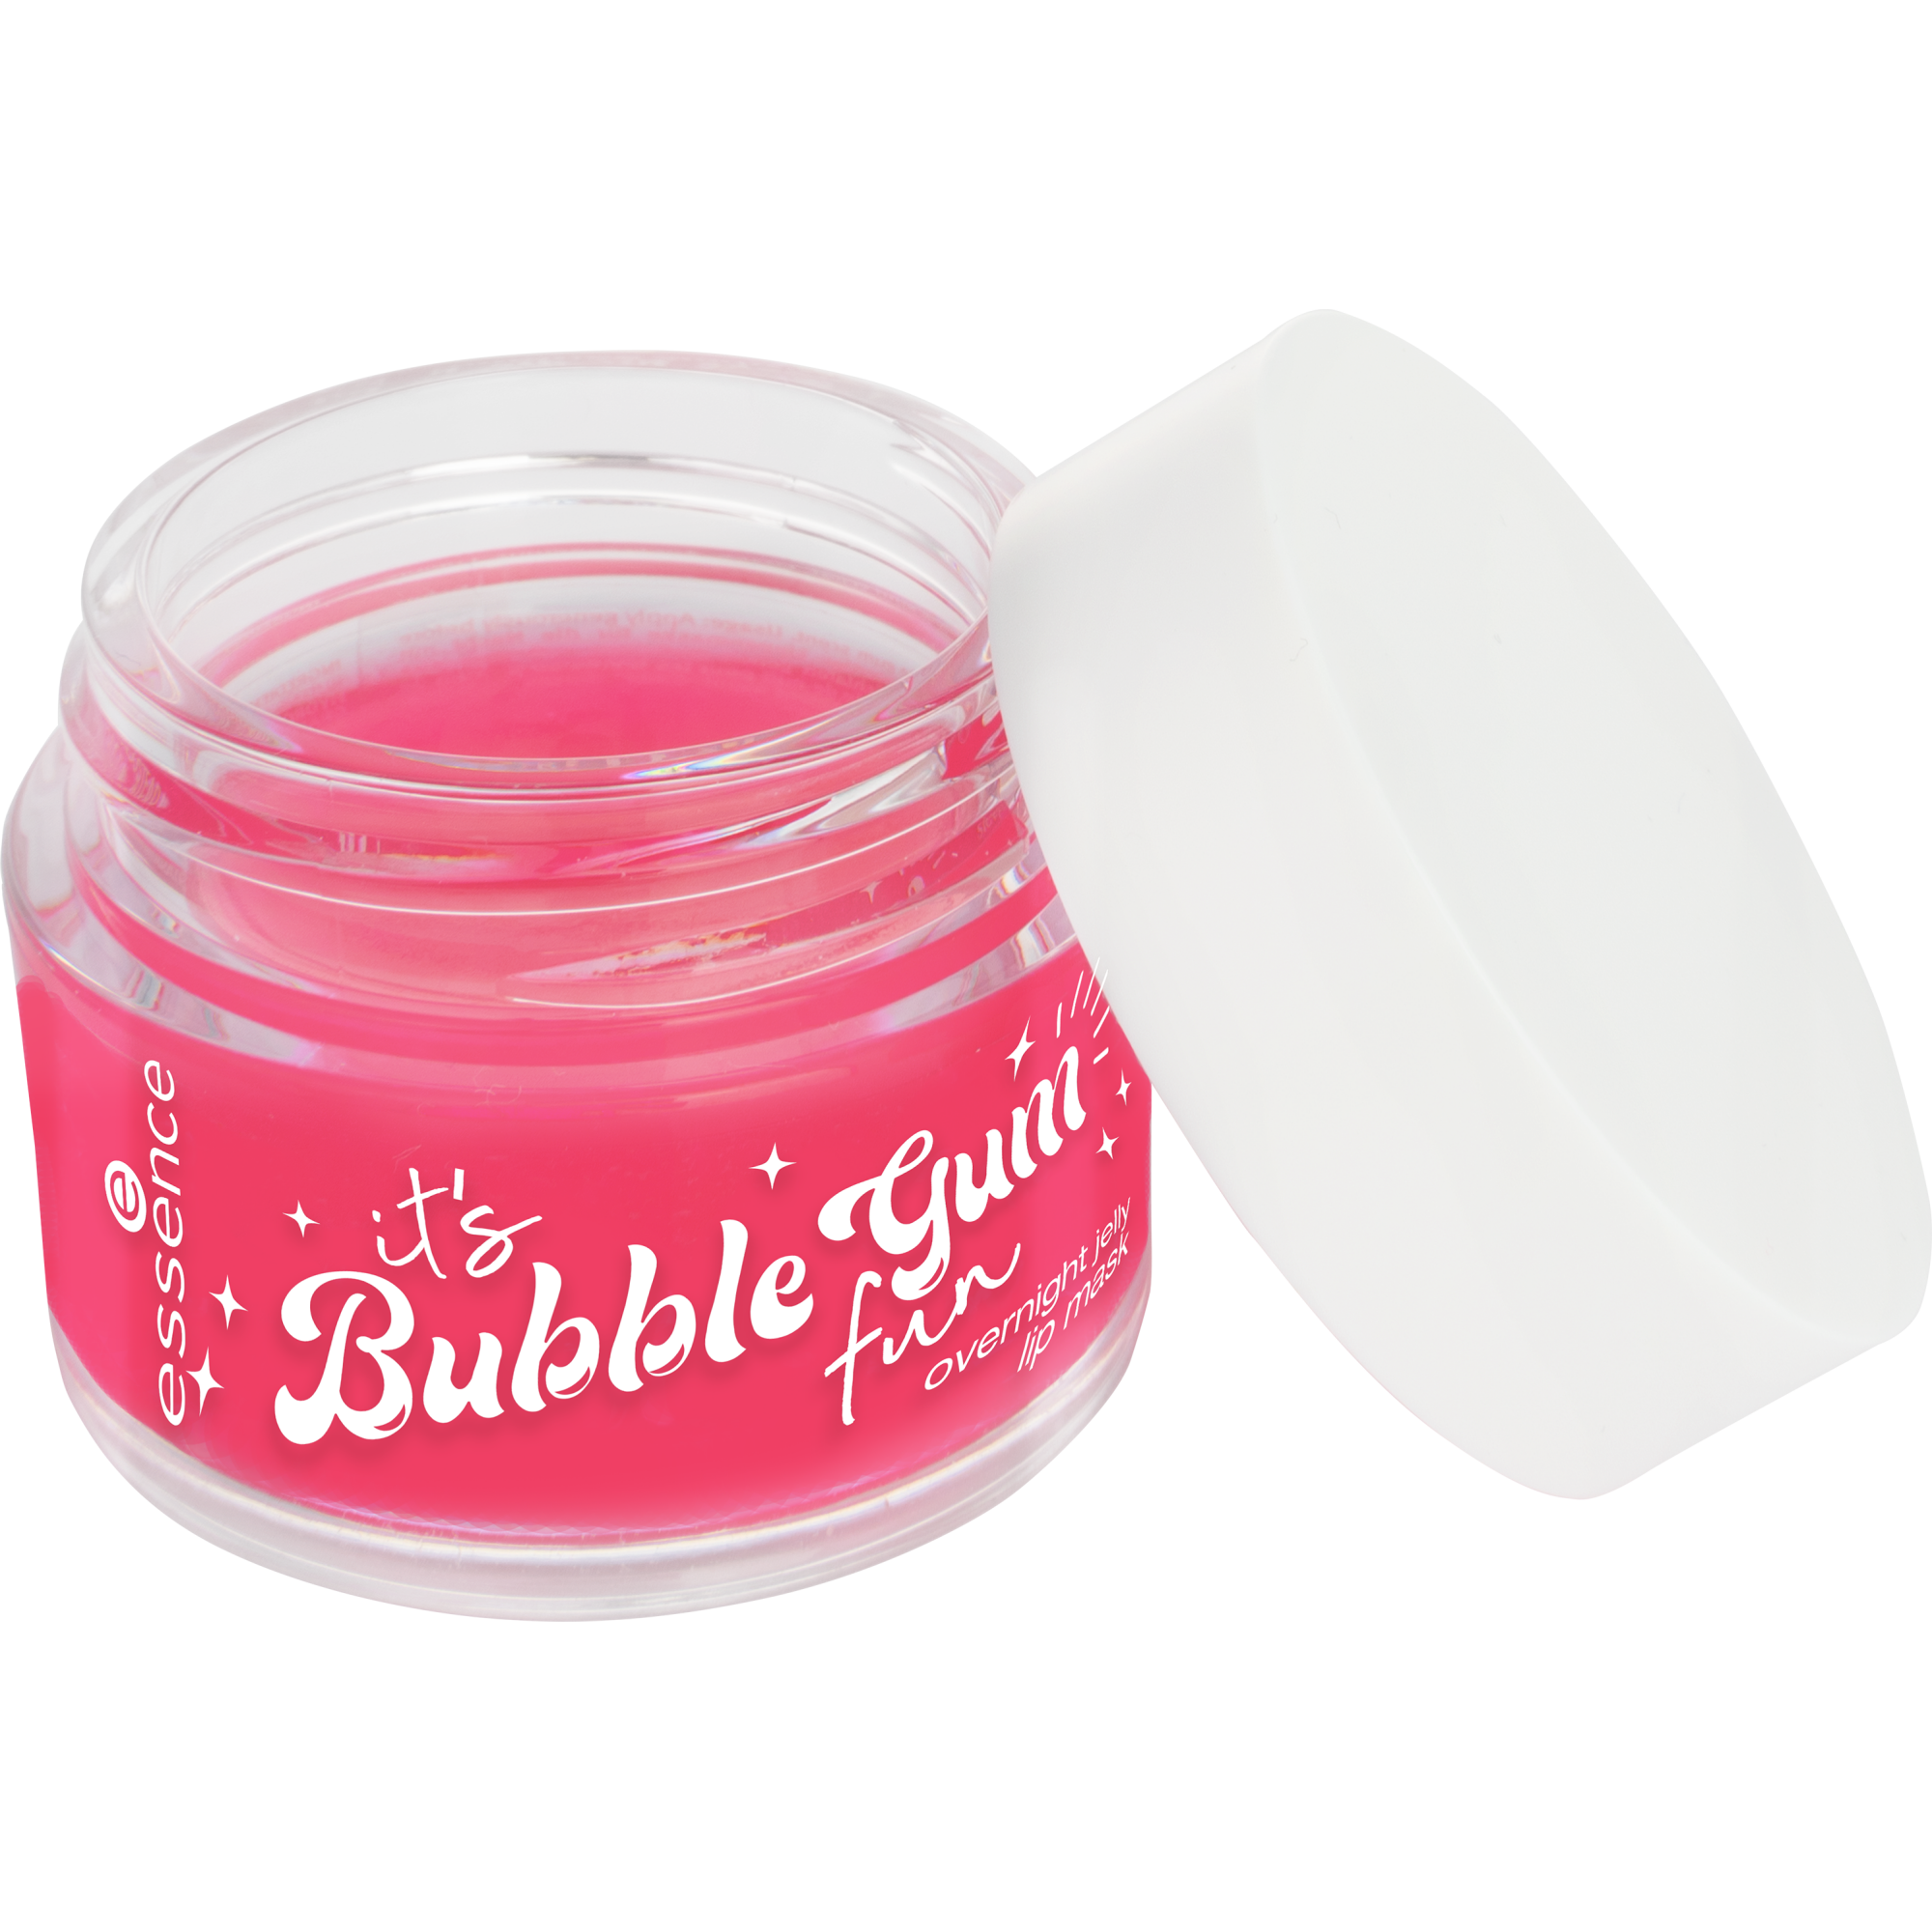 huulemask it's Bubble Gum fun overnight jelly lip mask